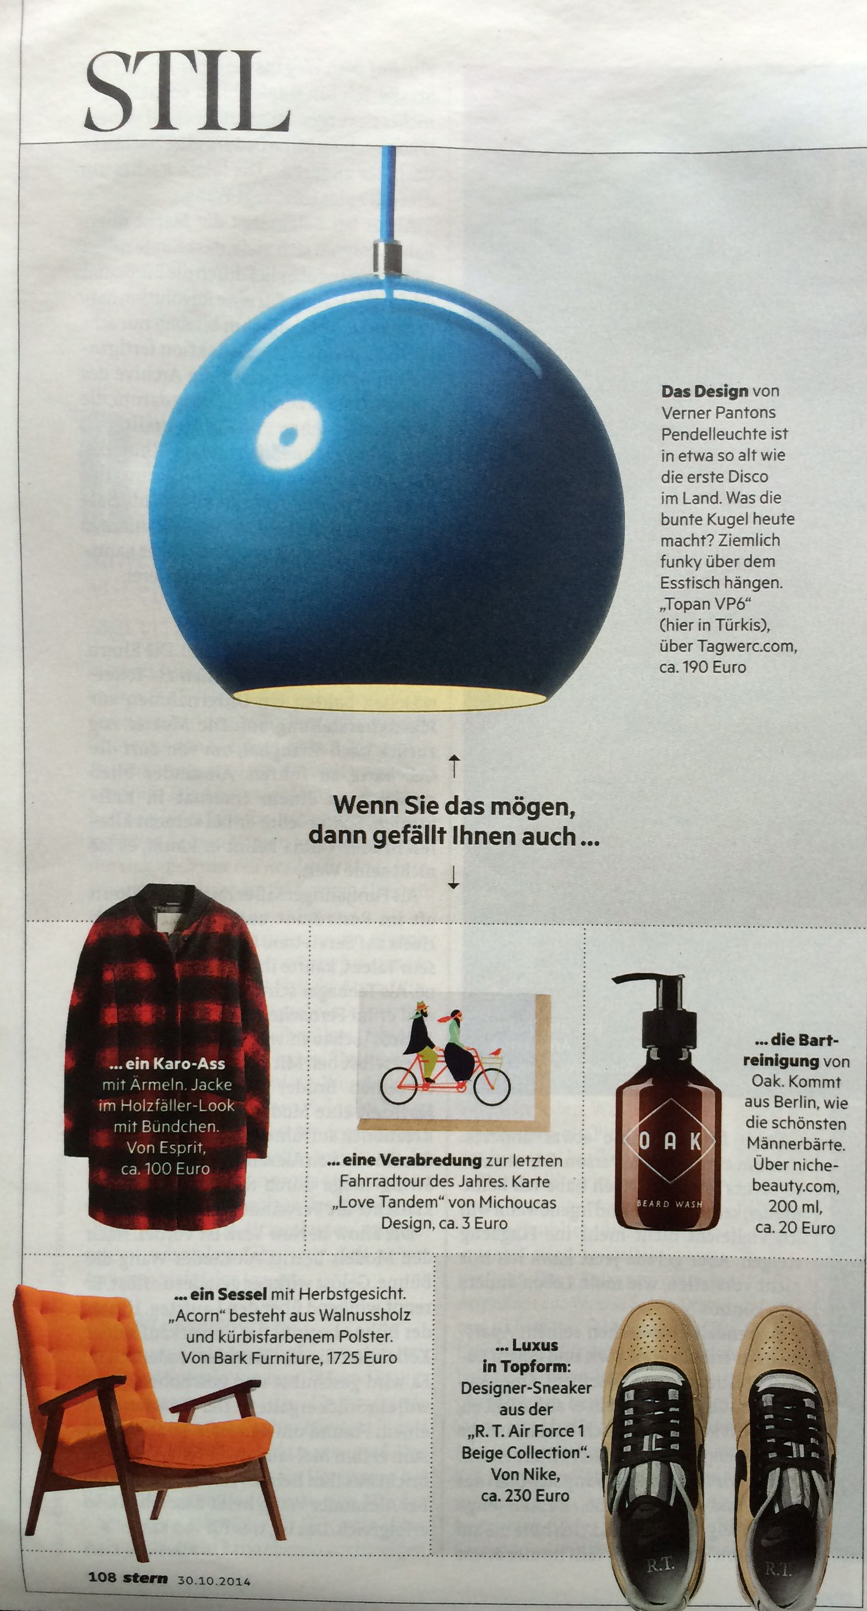 Stern magazine November 2014